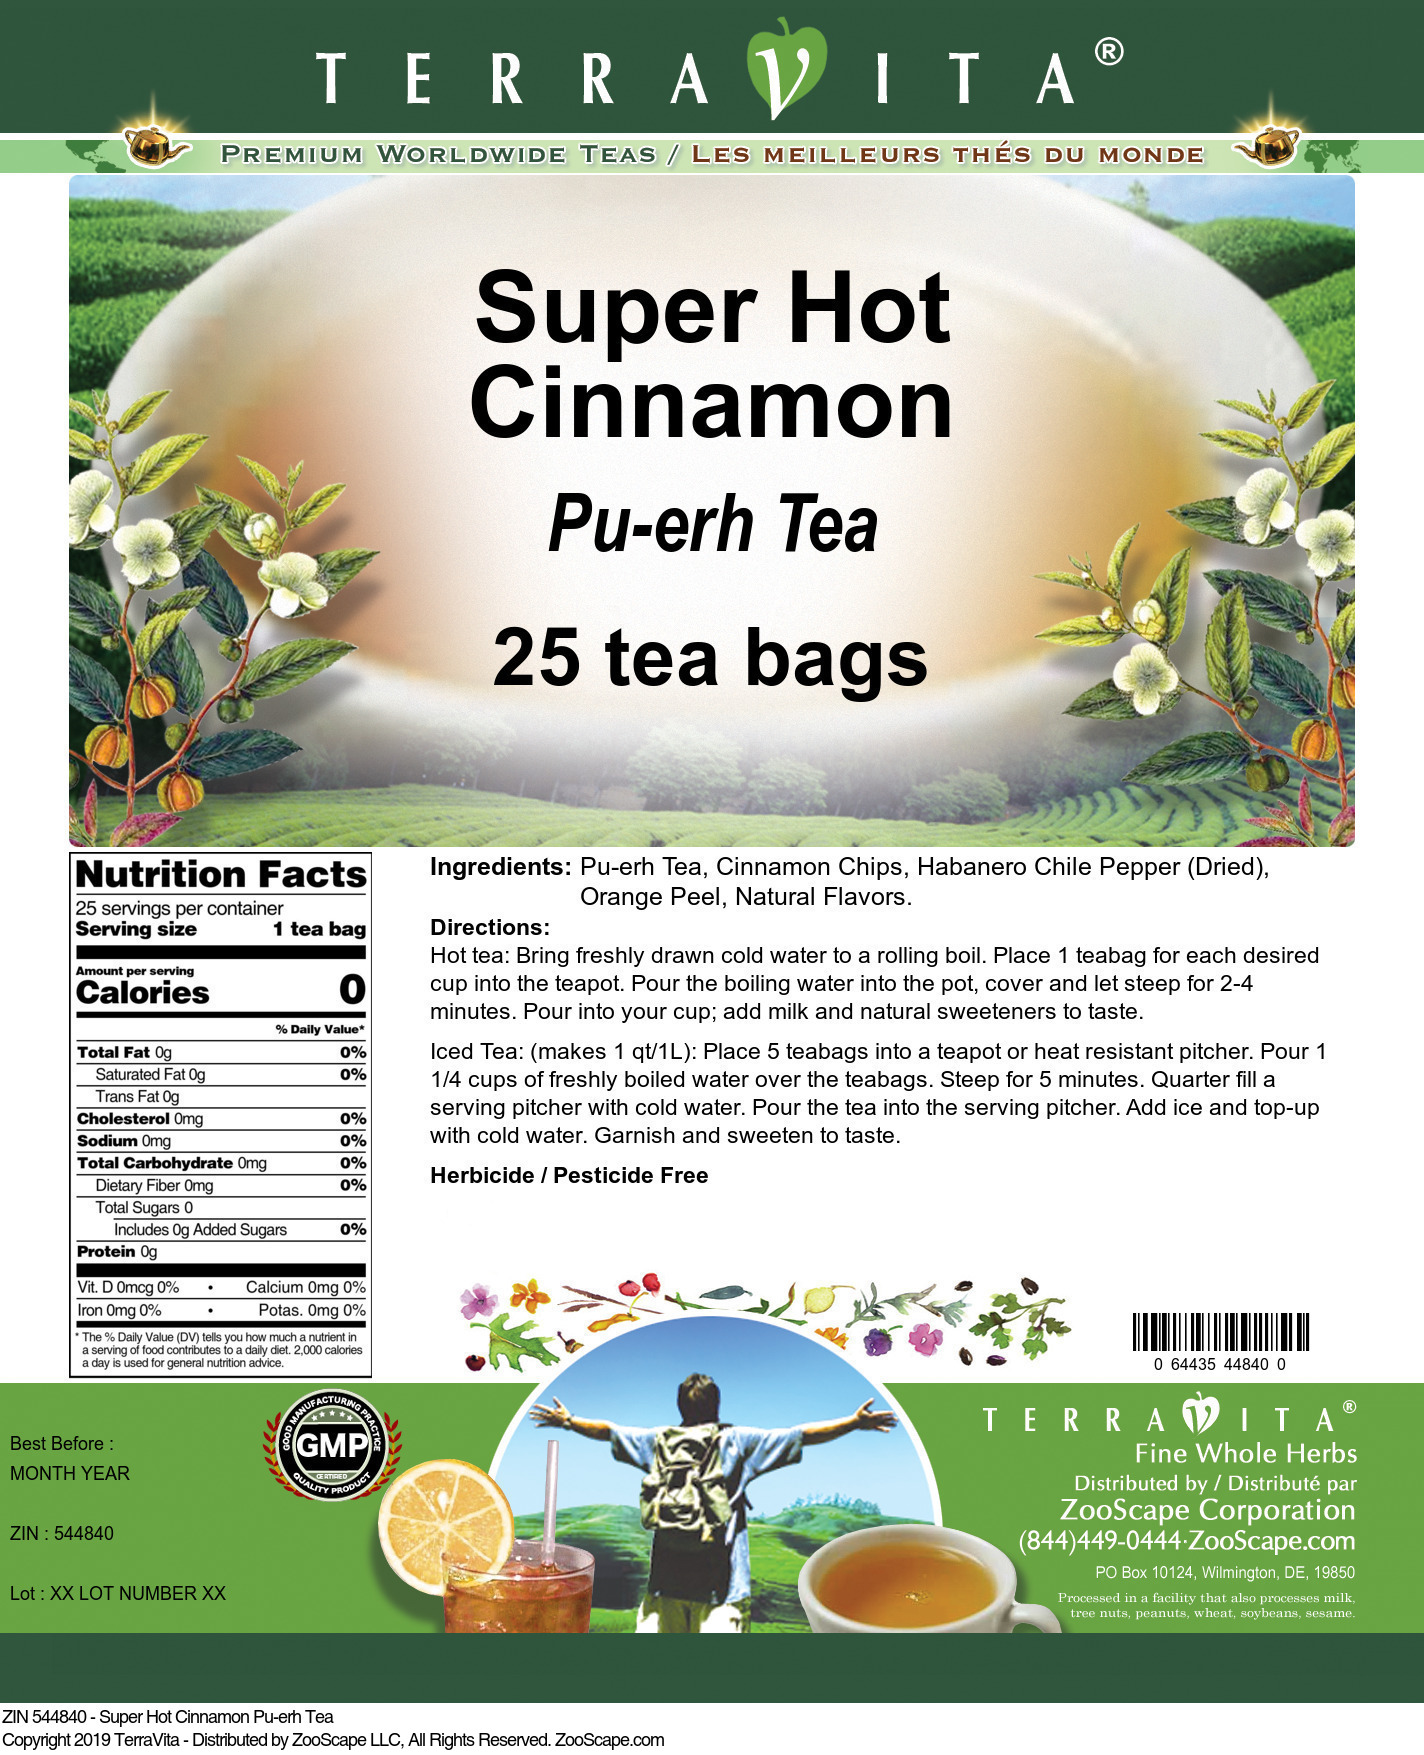 Super Hot Cinnamon Pu-erh Tea - Label